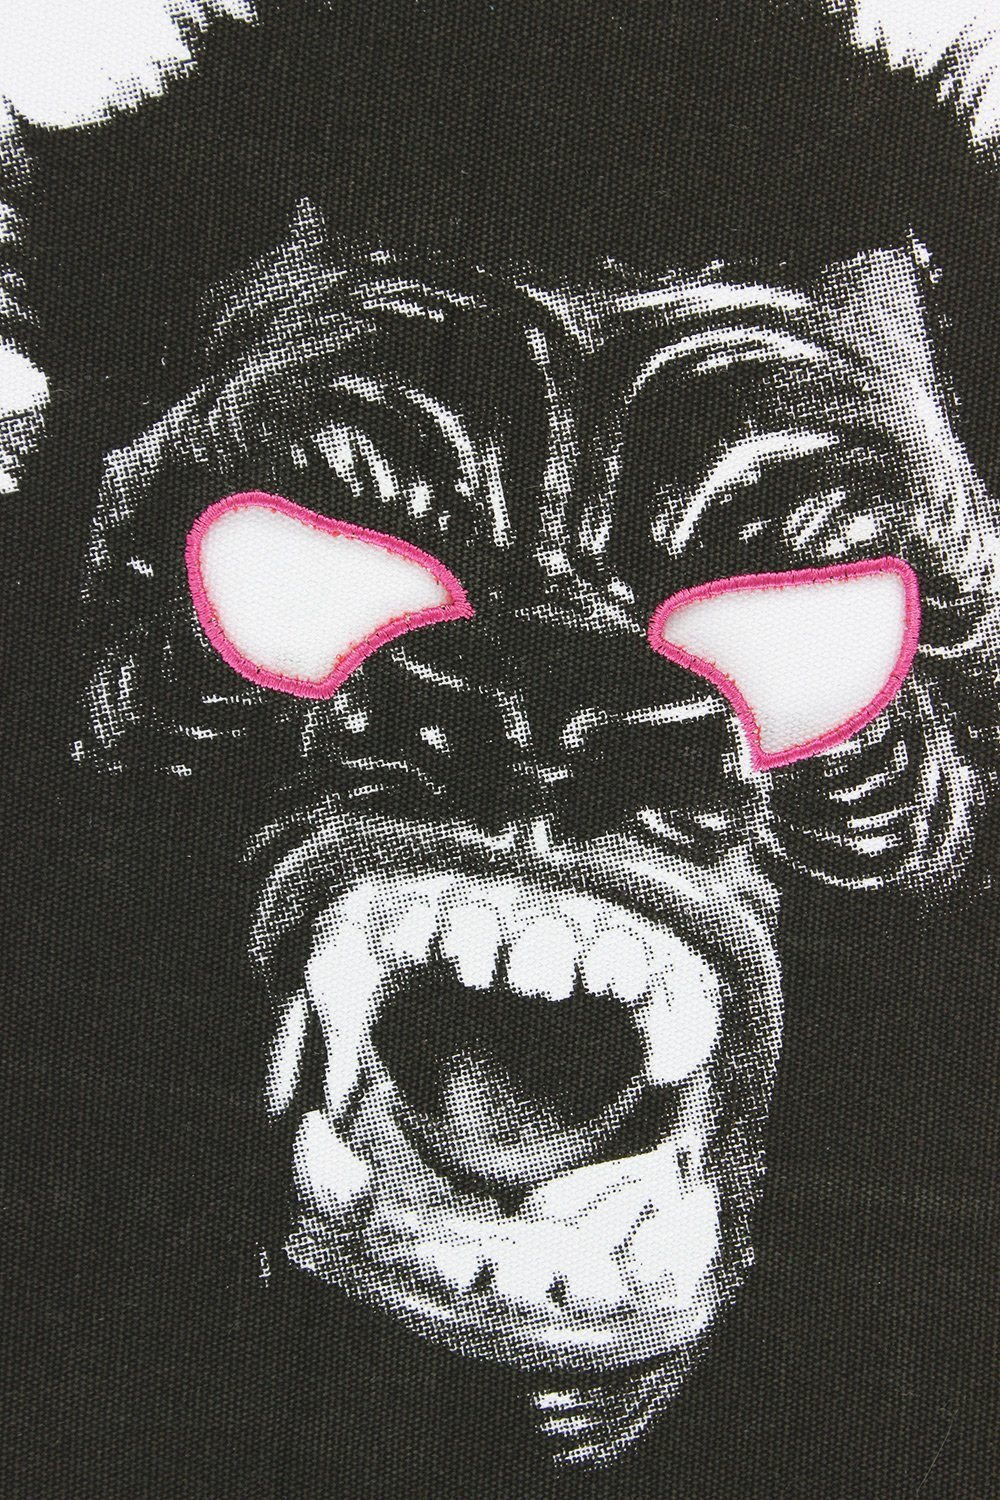 Gorilla Mask Tote Bag x Guerrilla Girls - Third Drawer Down